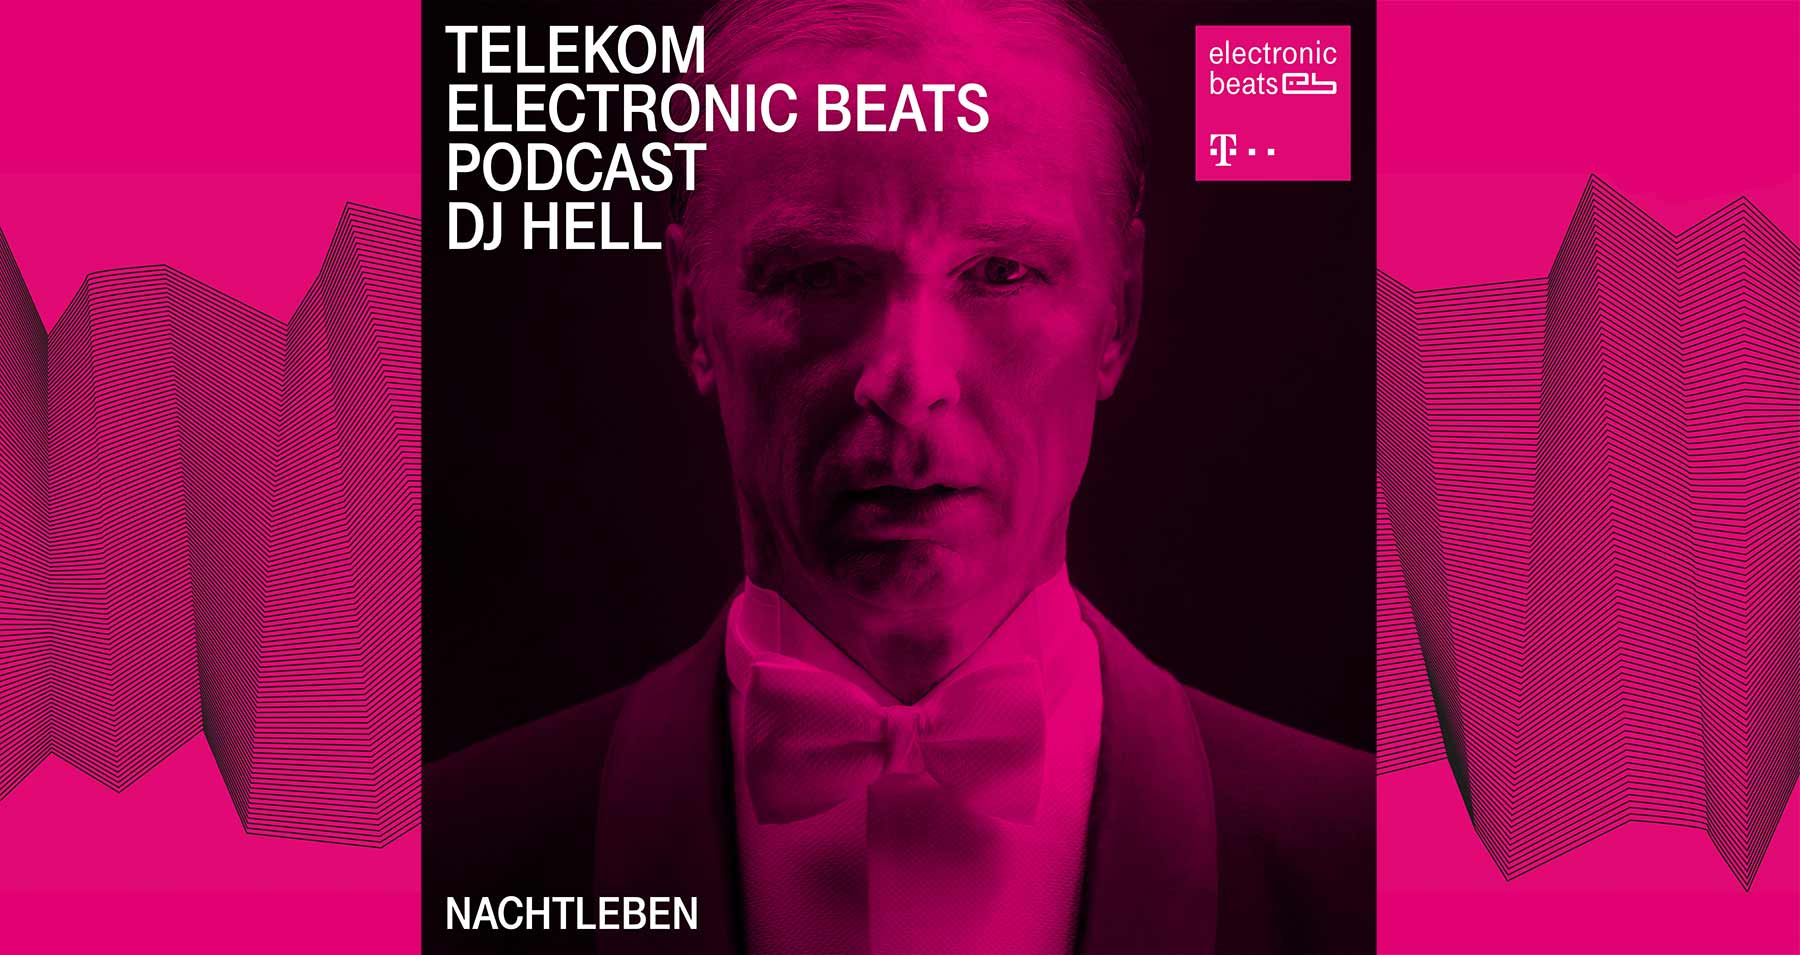 Telekom Electronic Beats Podcast mit DJ Hell & Westbam telekom-electronic-beats-podcast-dj-hell-nachtleben_01 